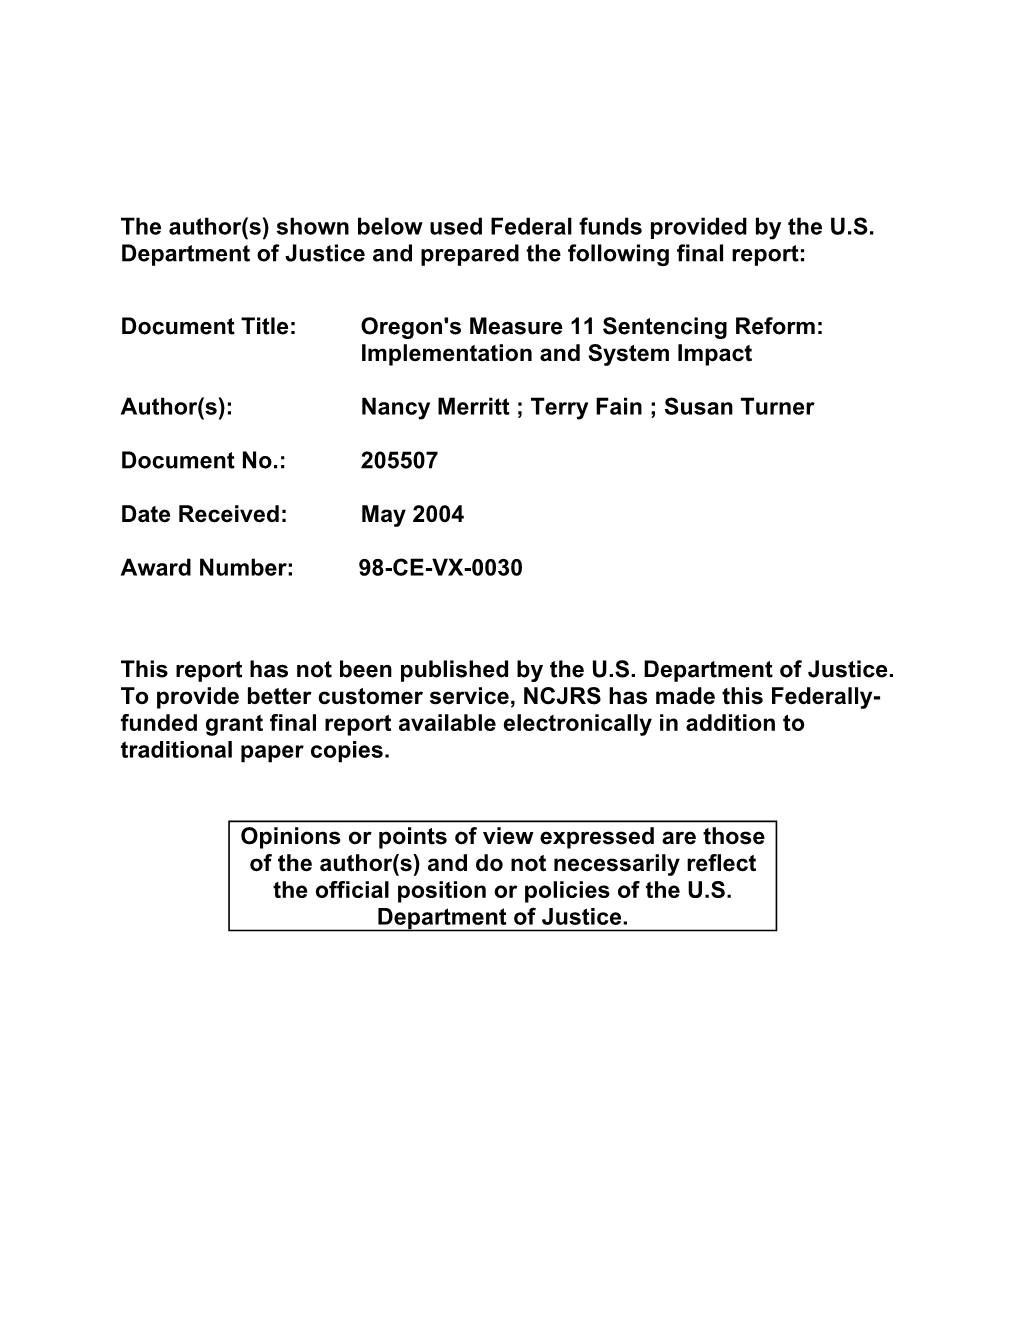 Oregon's Measure 11 Sentencing Reform: Implementation and System Impact